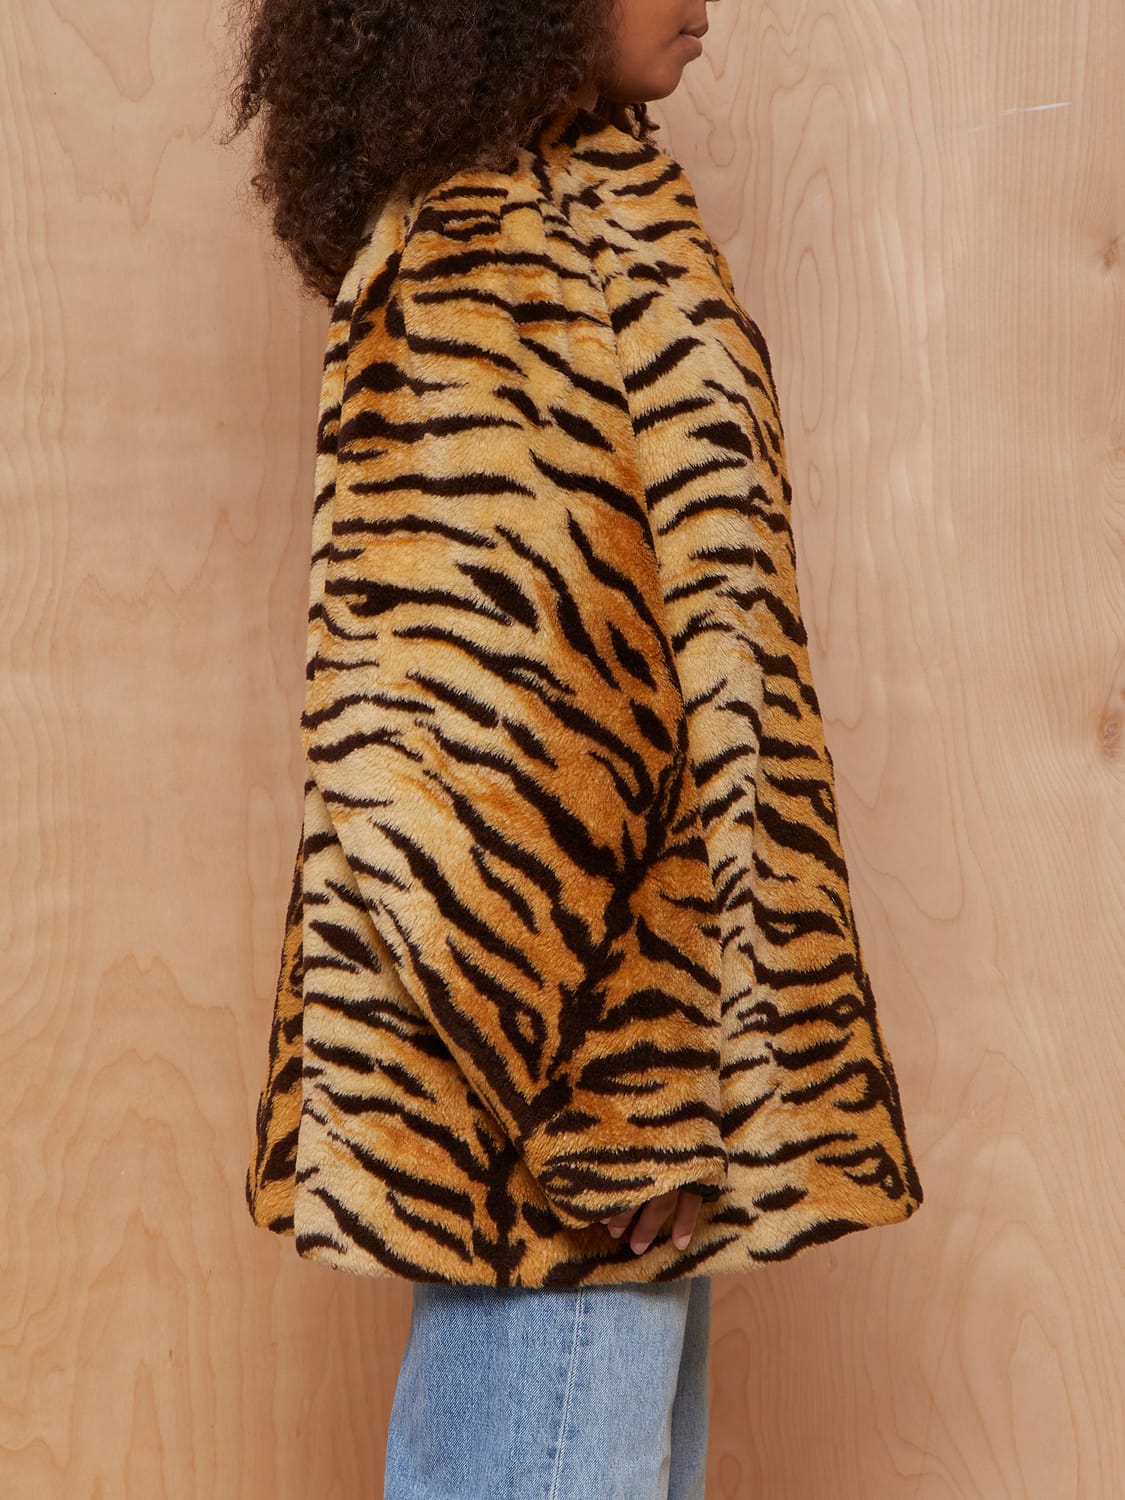 Vintage Tiger Print Coat